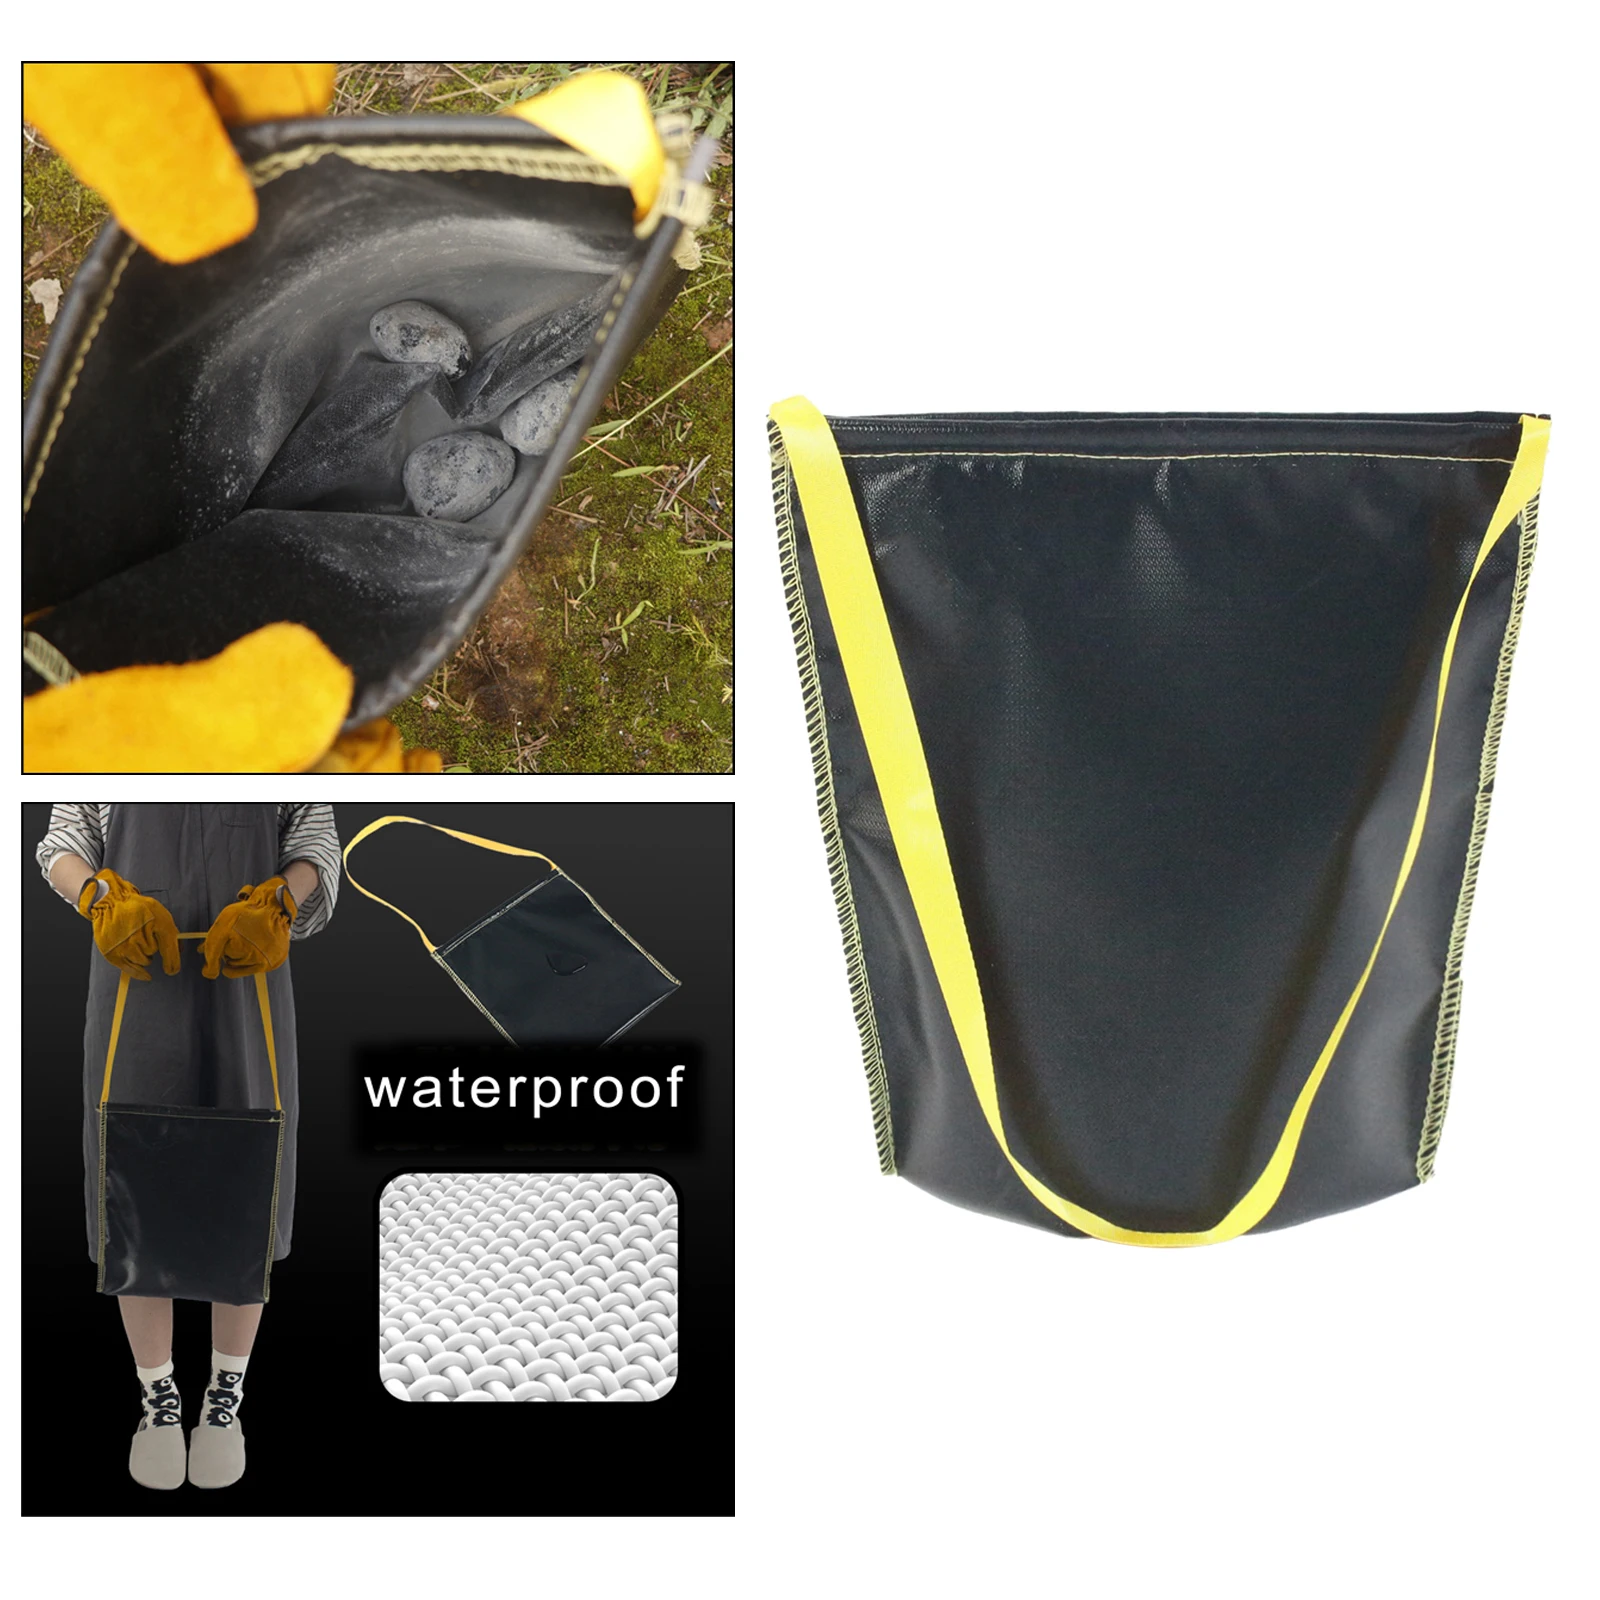 Fireproof Bag Waterproof Money Water Fire Safe Cash Pouch Document Holder